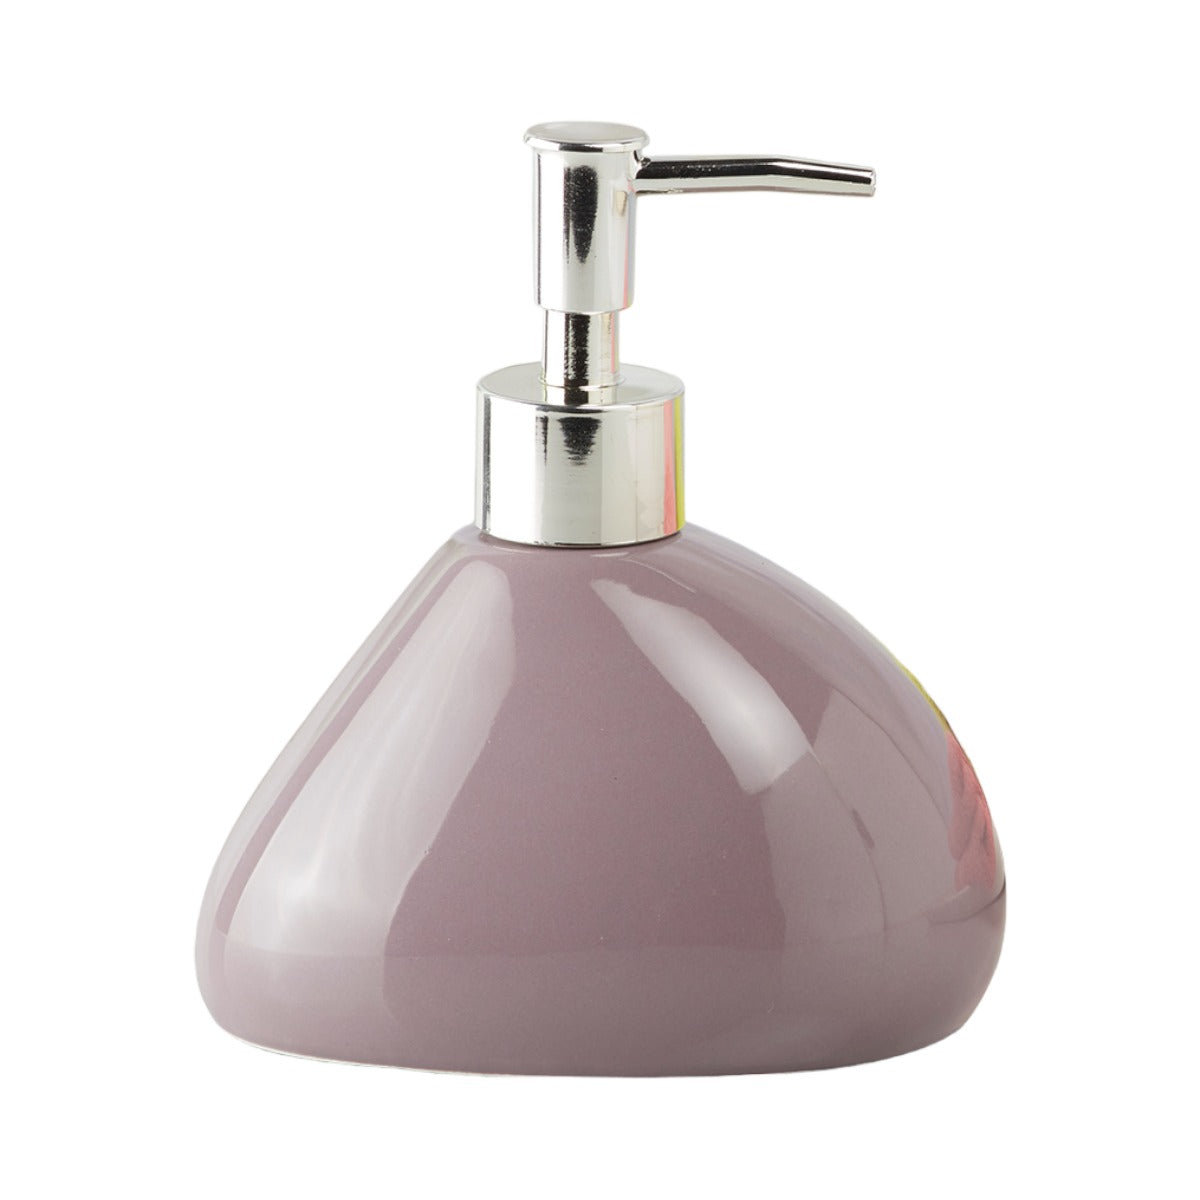 Ceramic Soap Dispenser Pump for Bathroom for Bath Gel, Lotion, Shampoo (7970)